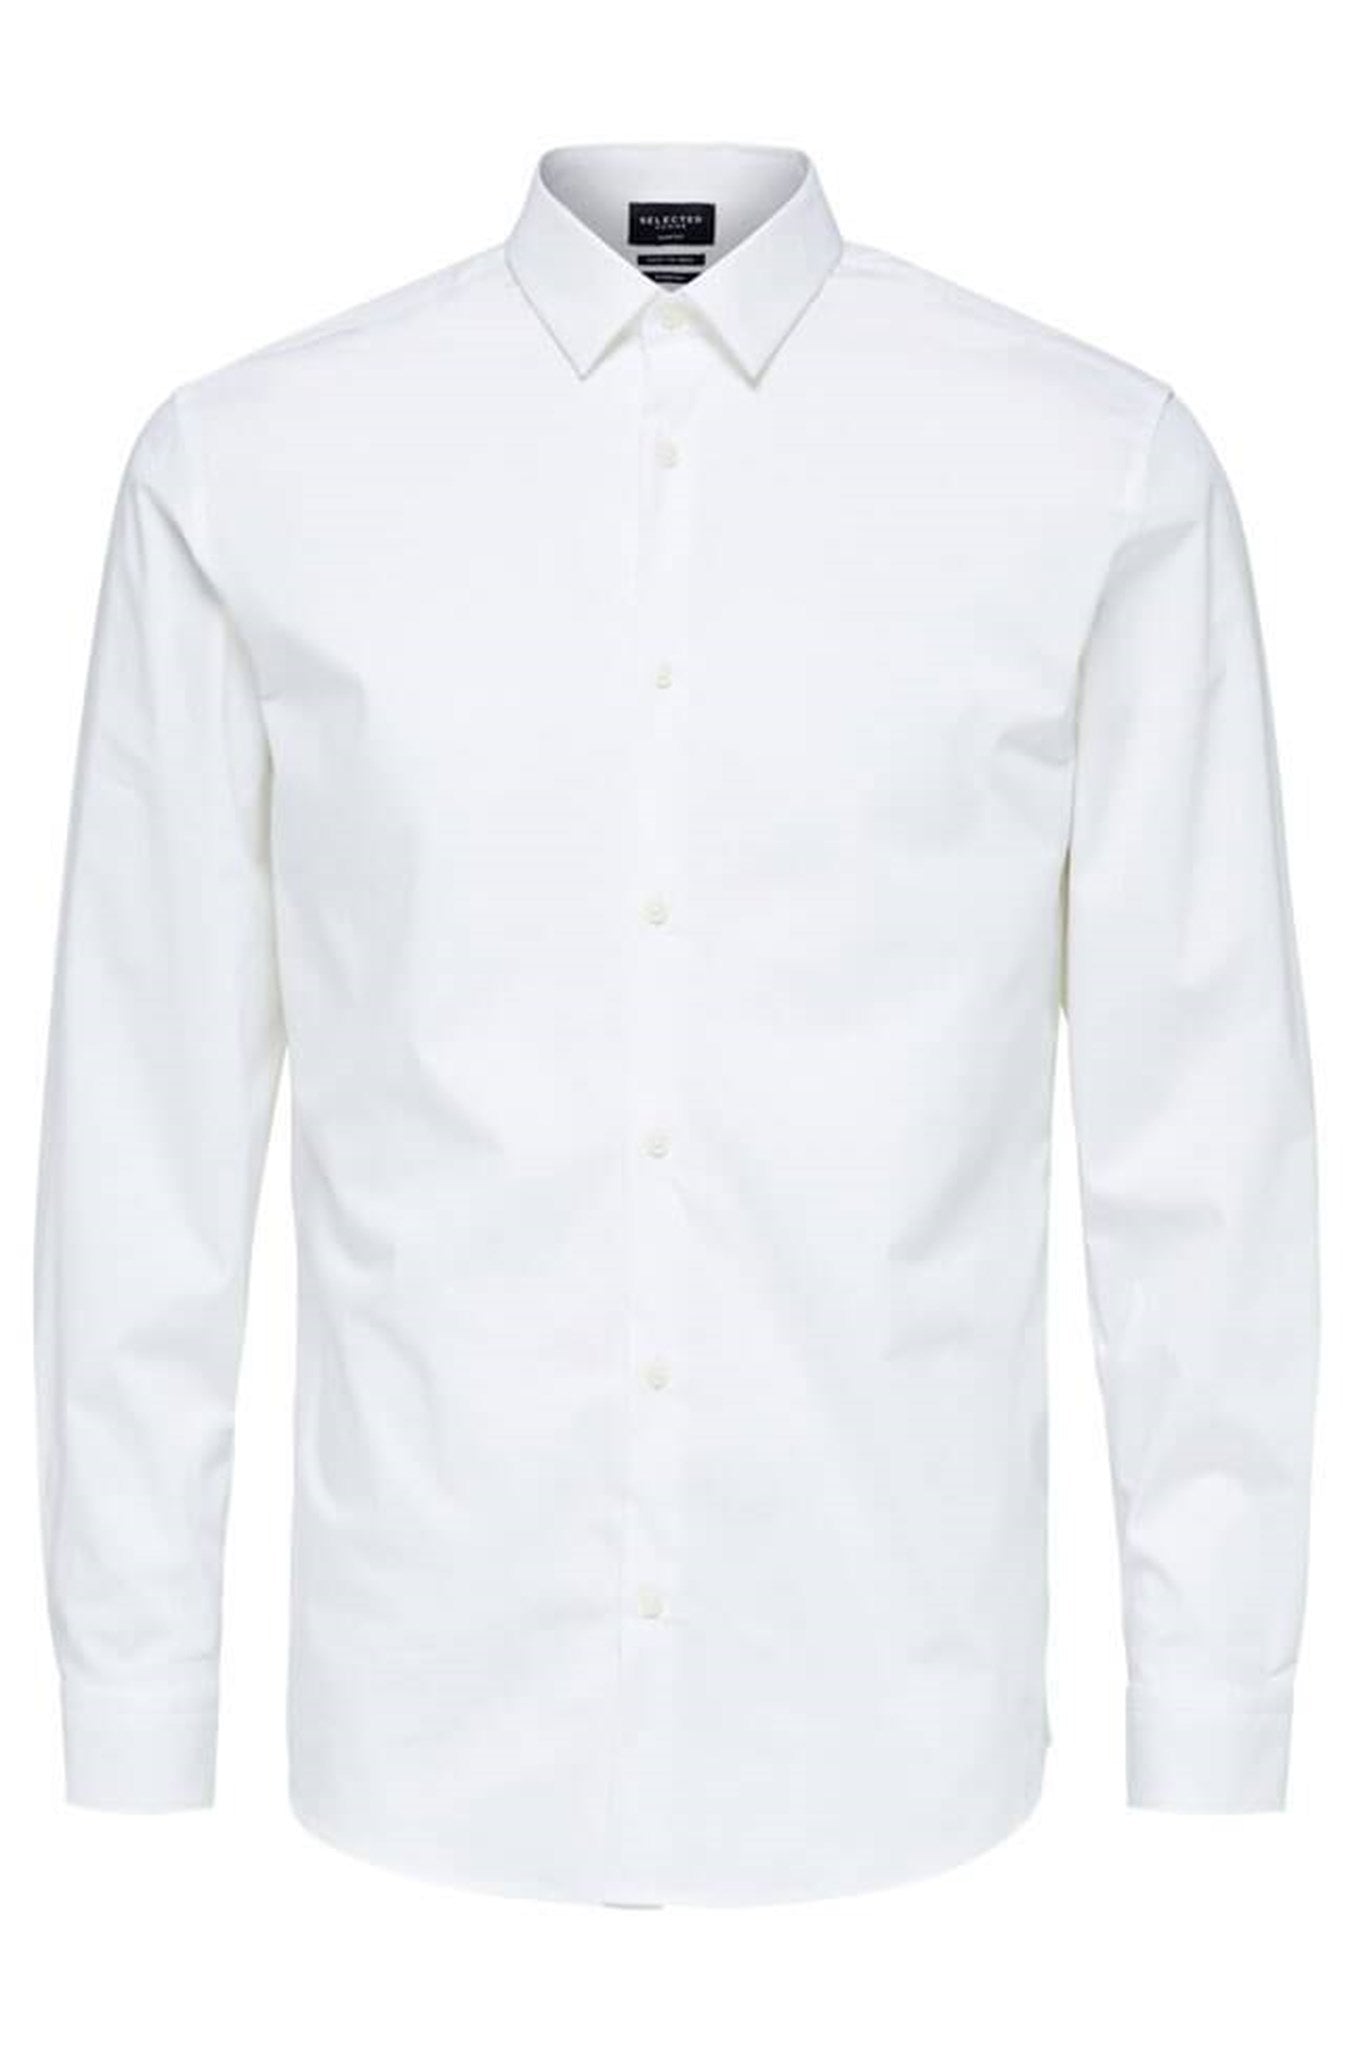 Preston shirt - Slim fit - White - Selected Homme - White 3